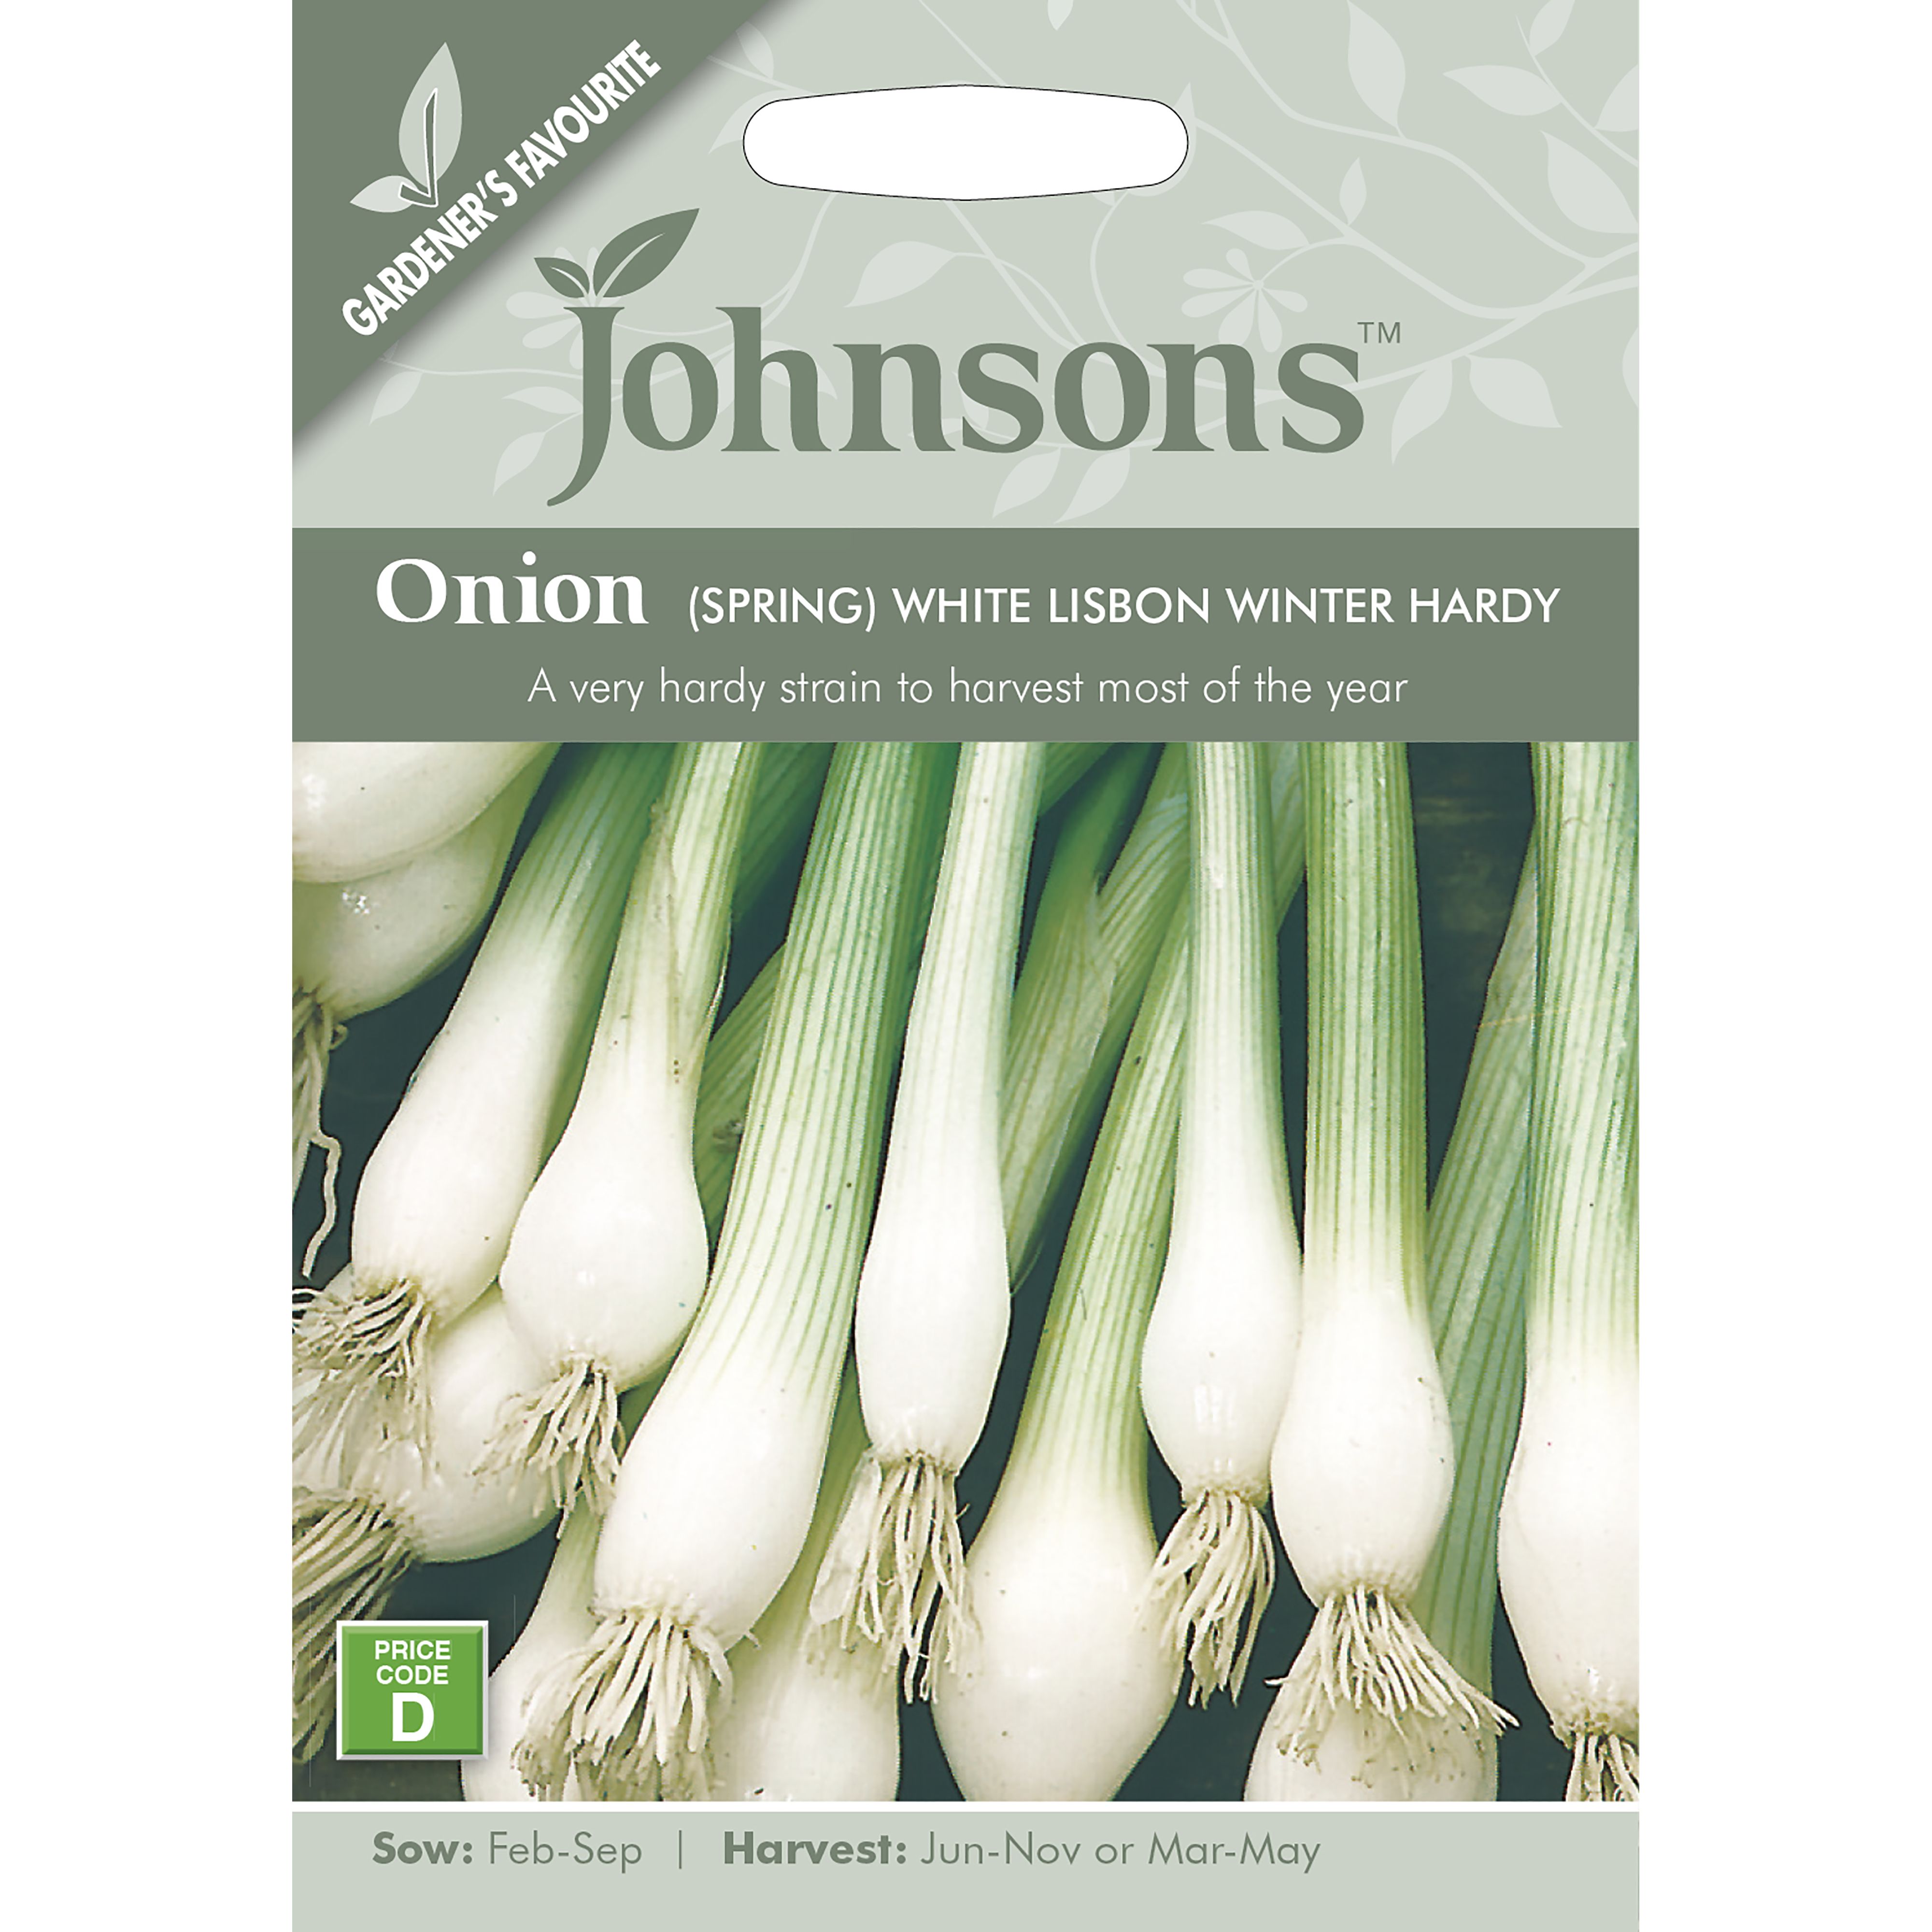 Johnsons White Lisbon Winter Hardy Spring onion Spring onion Seeds